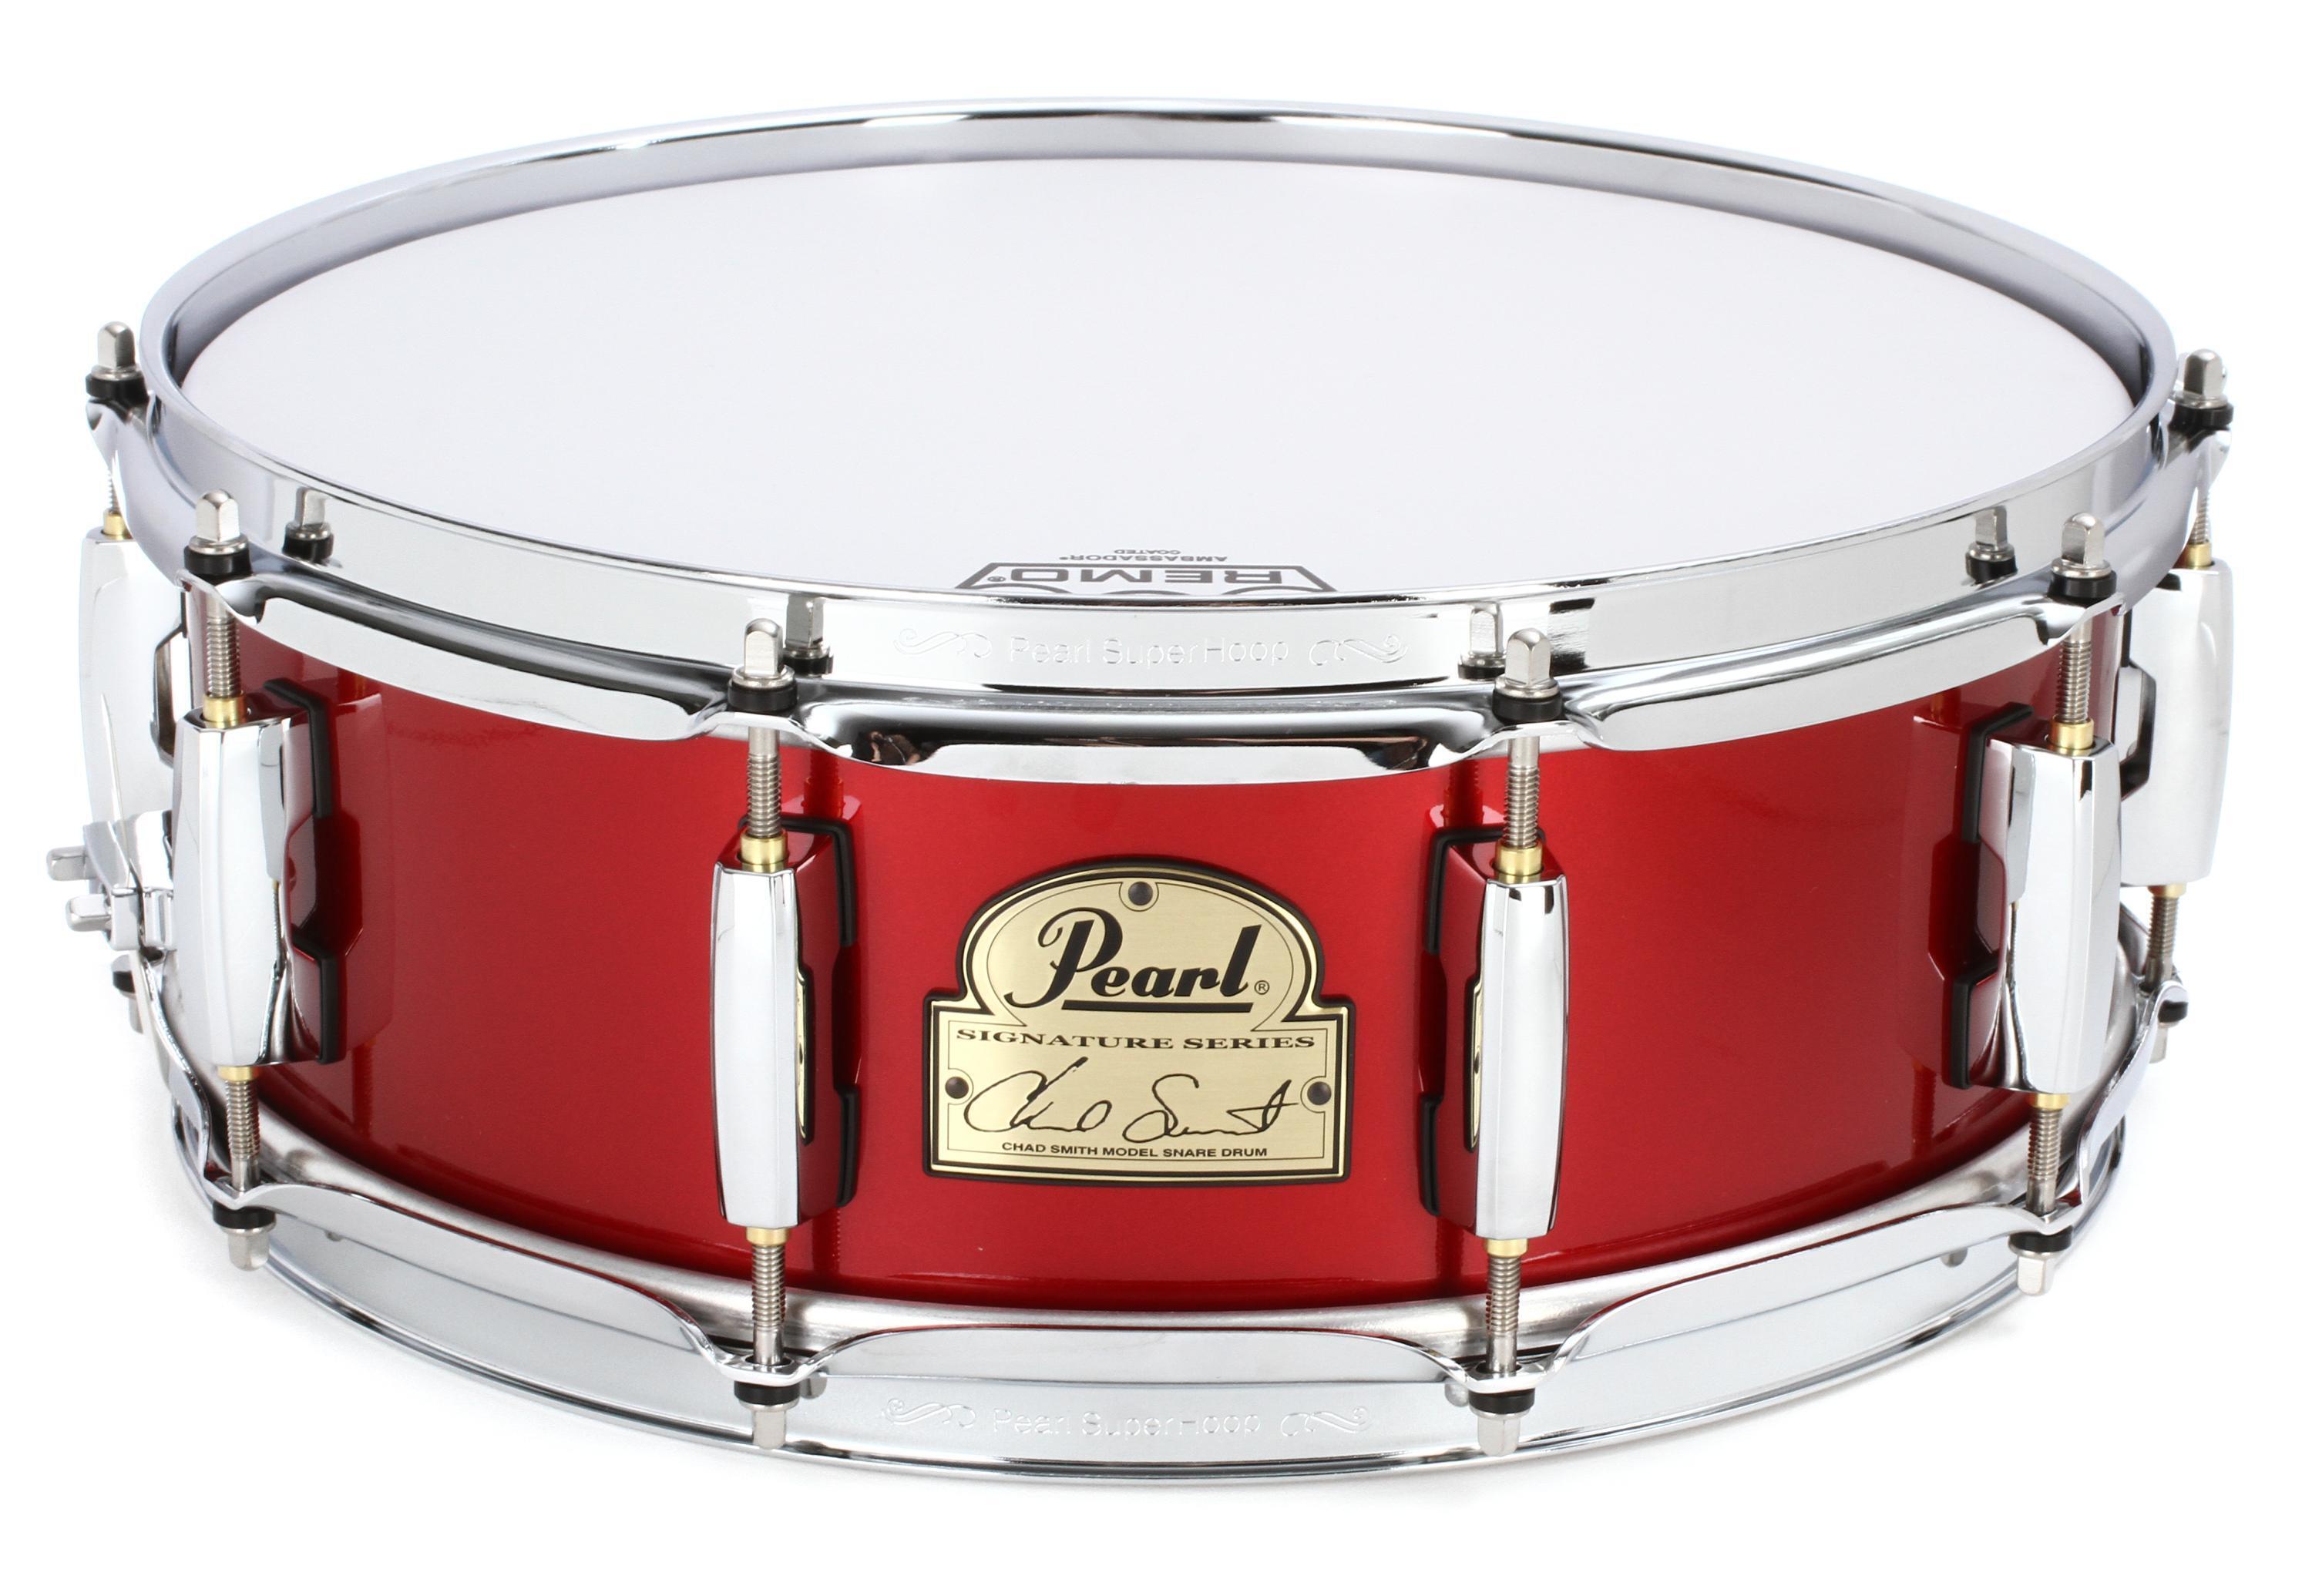 Pearl Chad Smith Signature Snare Drum - 5